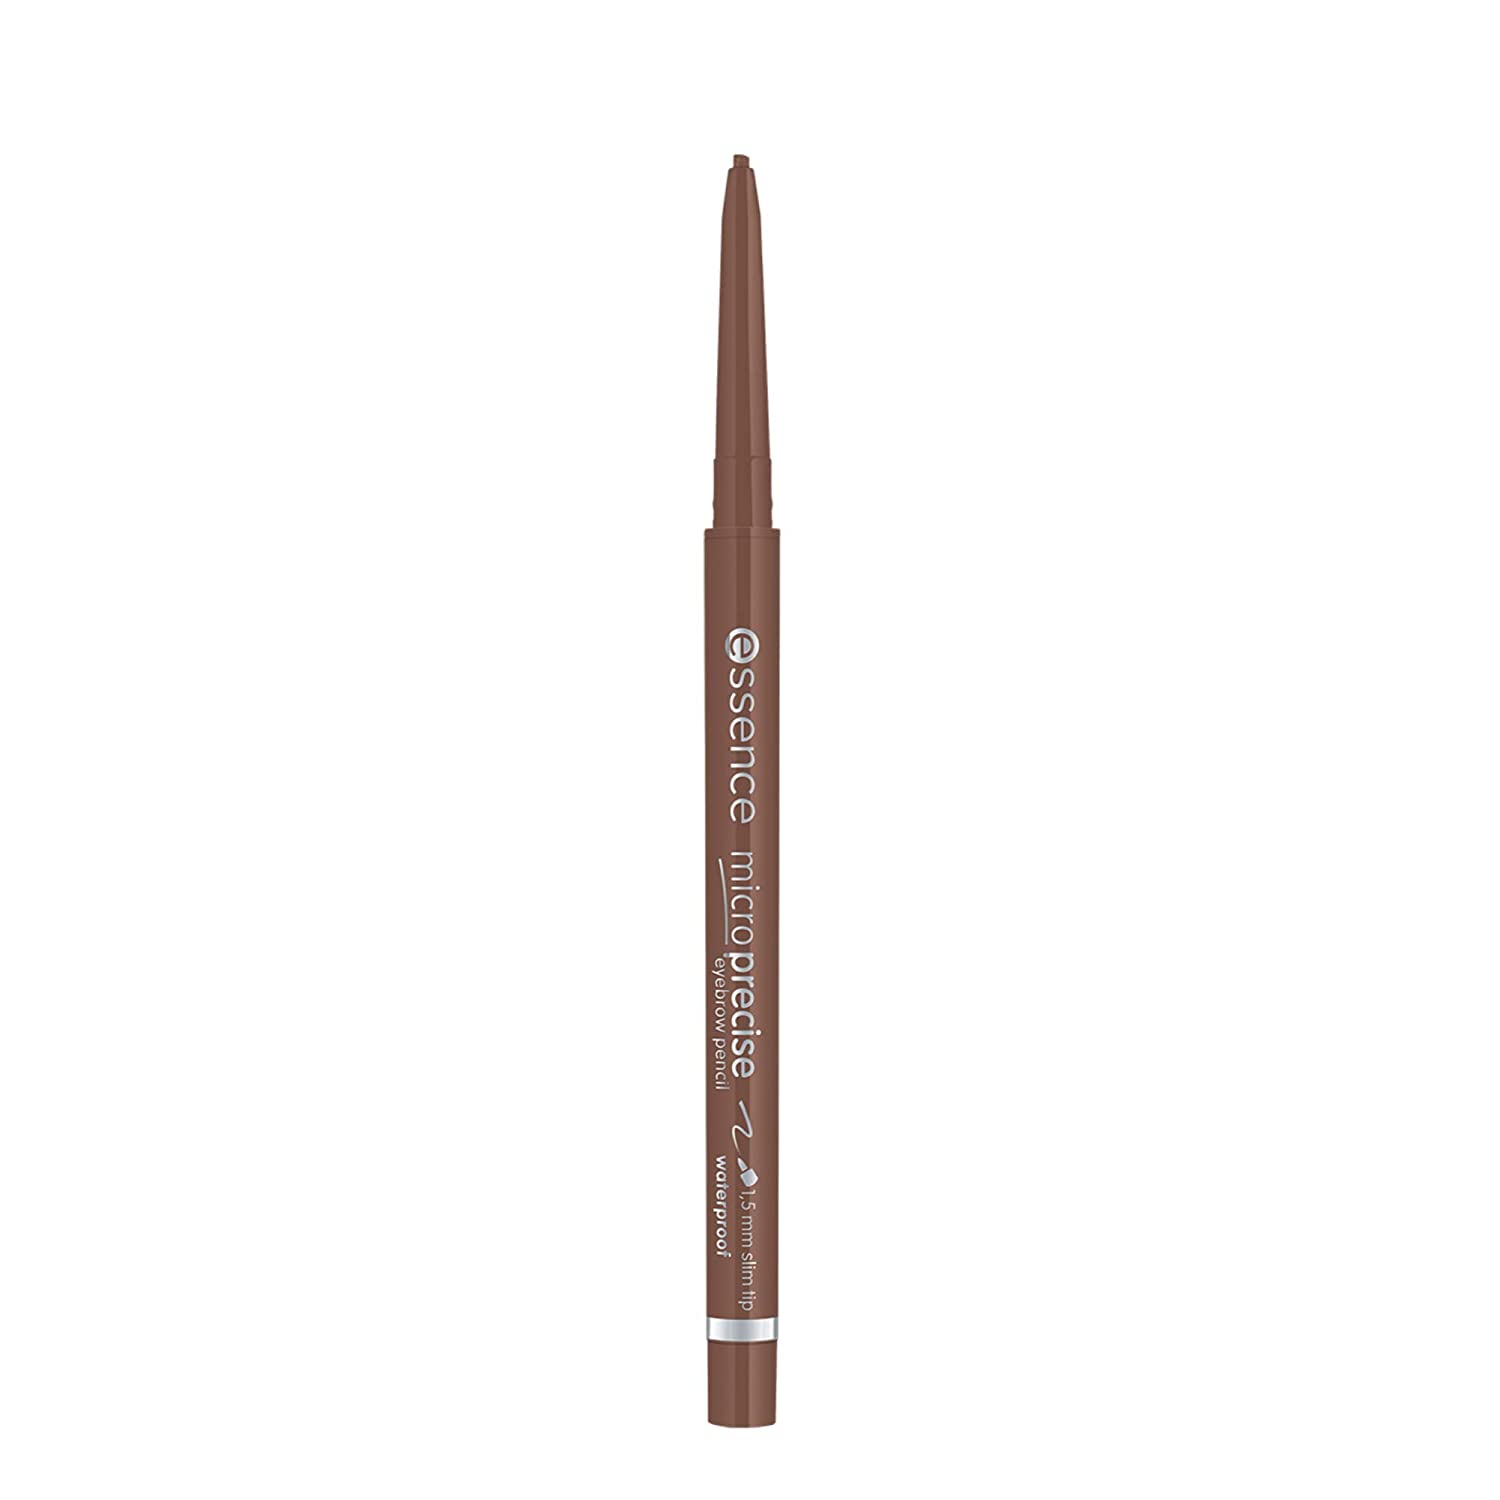 essence cosmetics essence Micro precise eyebrow pencil, eye pencil, eyebrow pencil, no. 02 light brown, brown, defining, long-lasting, natural, vegan, waterproof, microplastic particles free (0.05 g), brown ‎02